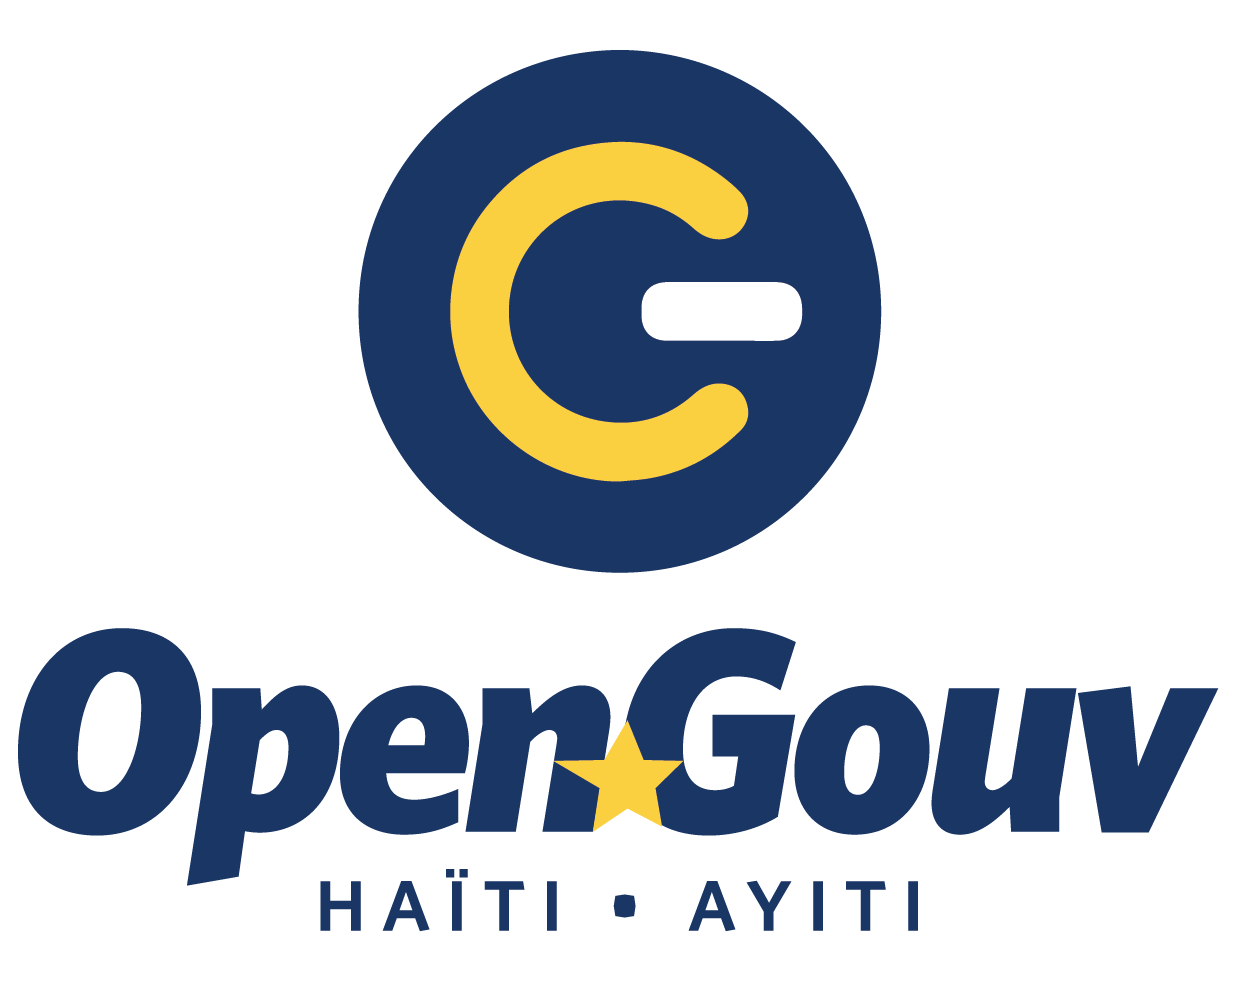 OpenGouv Haiti